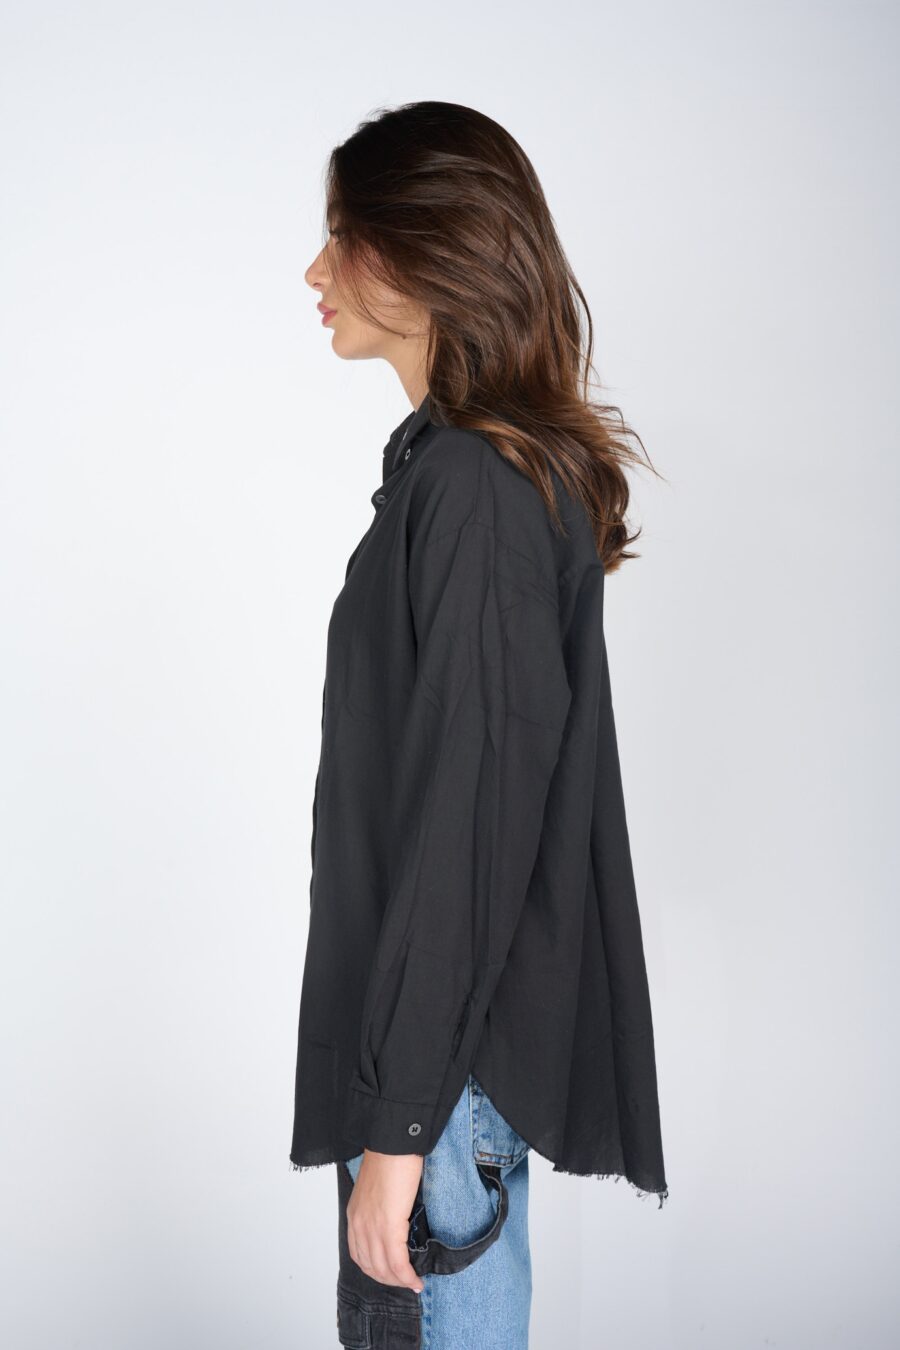 Black shirt with zip details | ZIP BLACK SHIRT